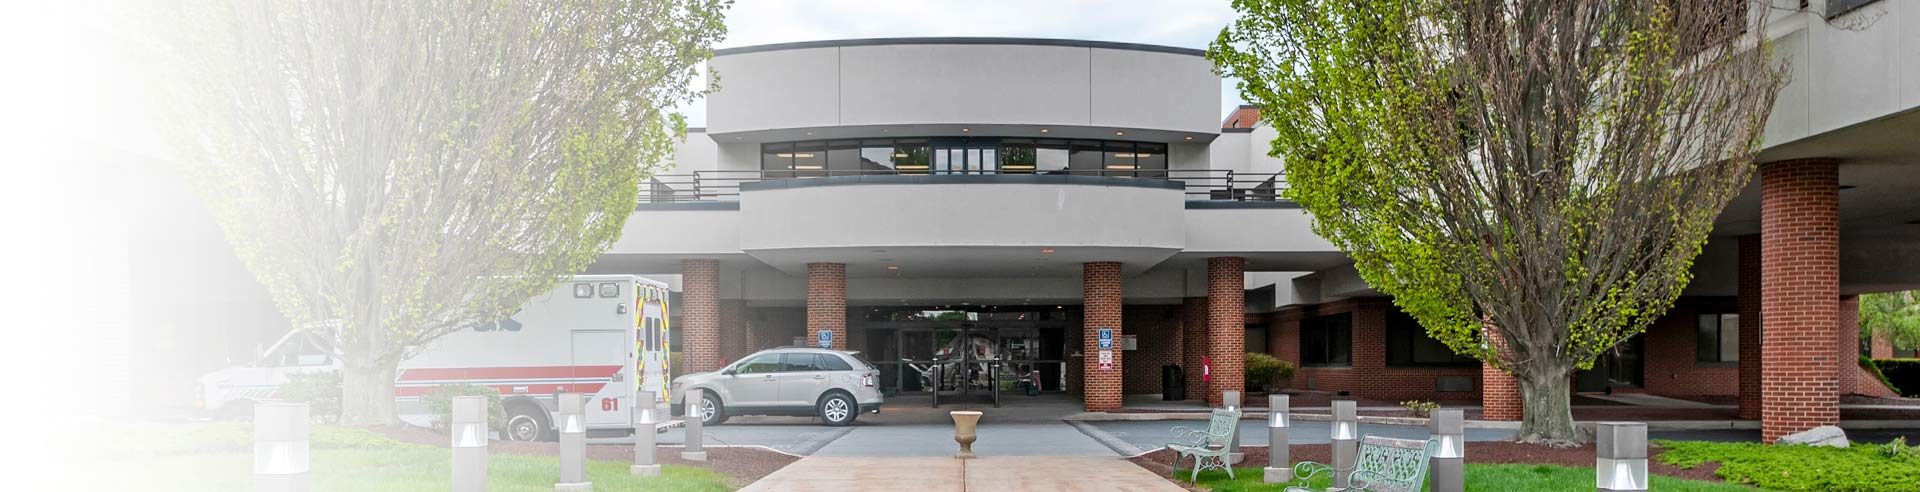  Encompass Health Rehabilitation Hospital of Mechanicsburg exterior image